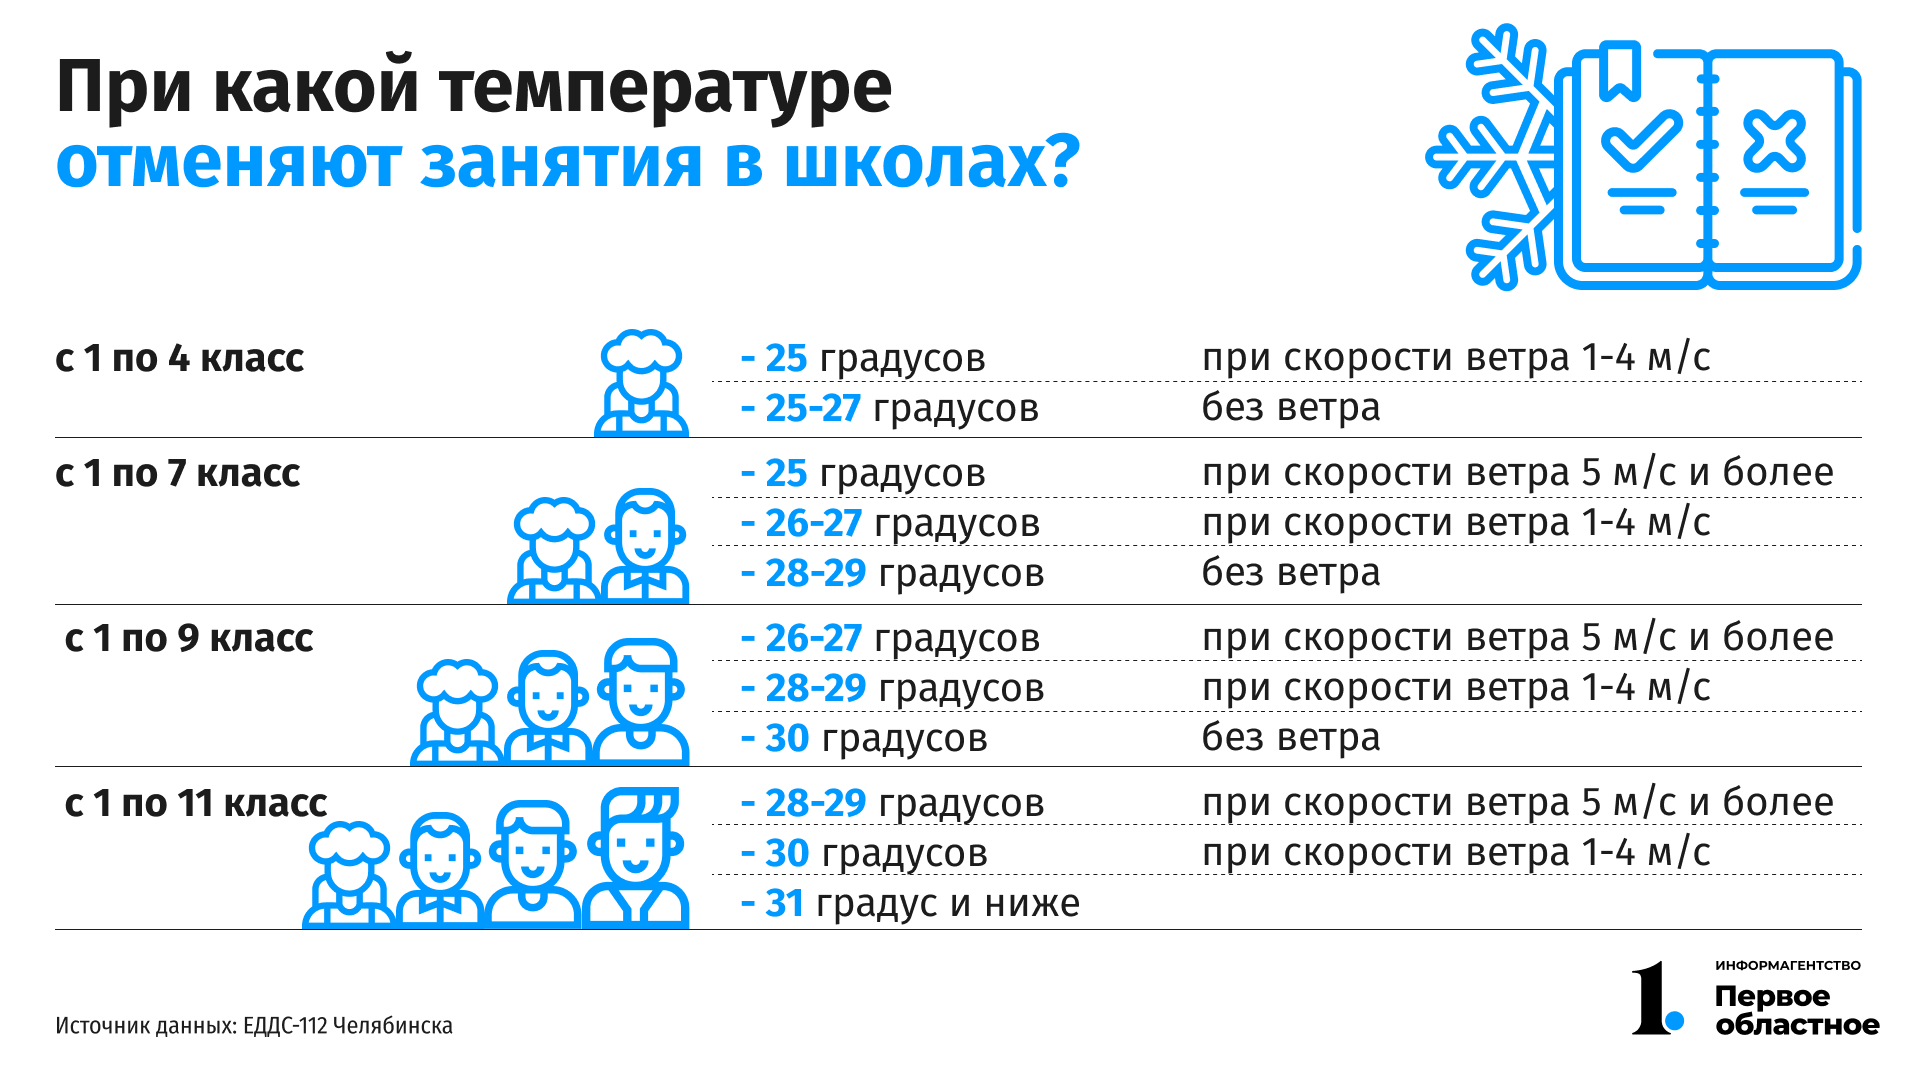 Отменят ли школу 19 февраля. При какой температуре отменяют занятия в школе. При какой температуре отменяют занятия в школе в Челябинске. Температура при которой отменяются занятия в школе. Занятия в школах Челябинска.